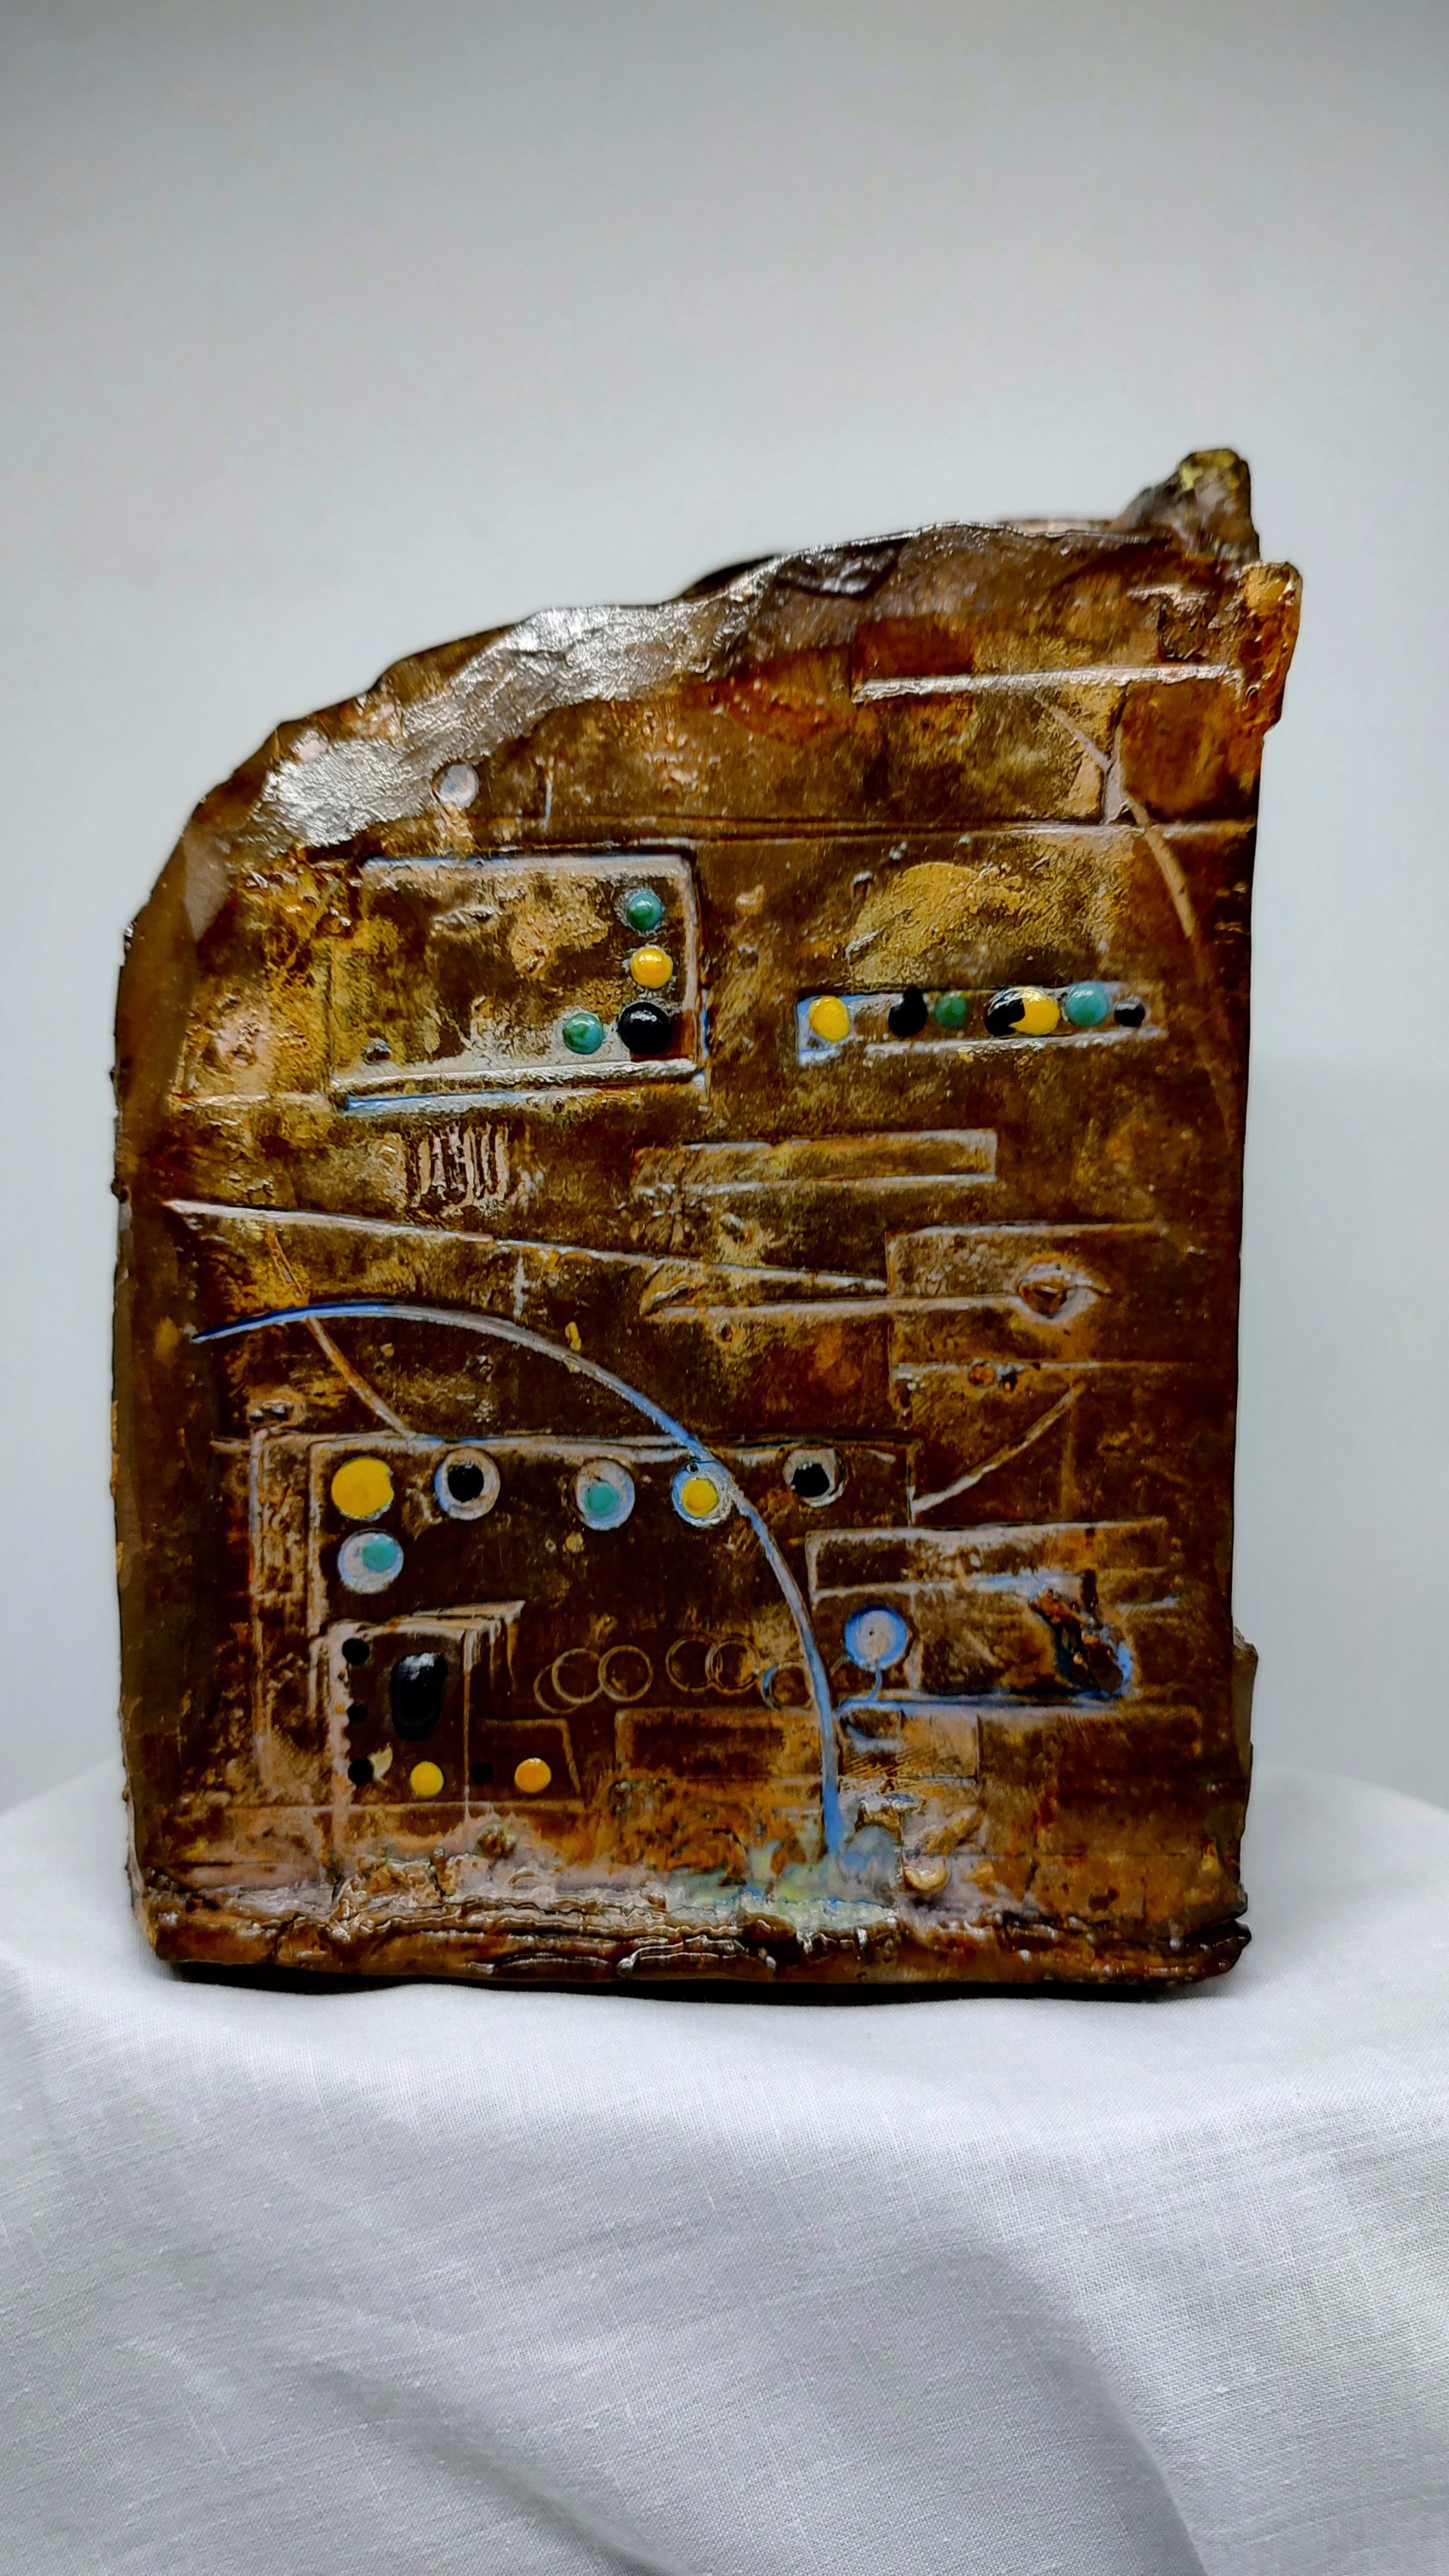 Vessel #1, Artifacts Recovered by Derek Larson